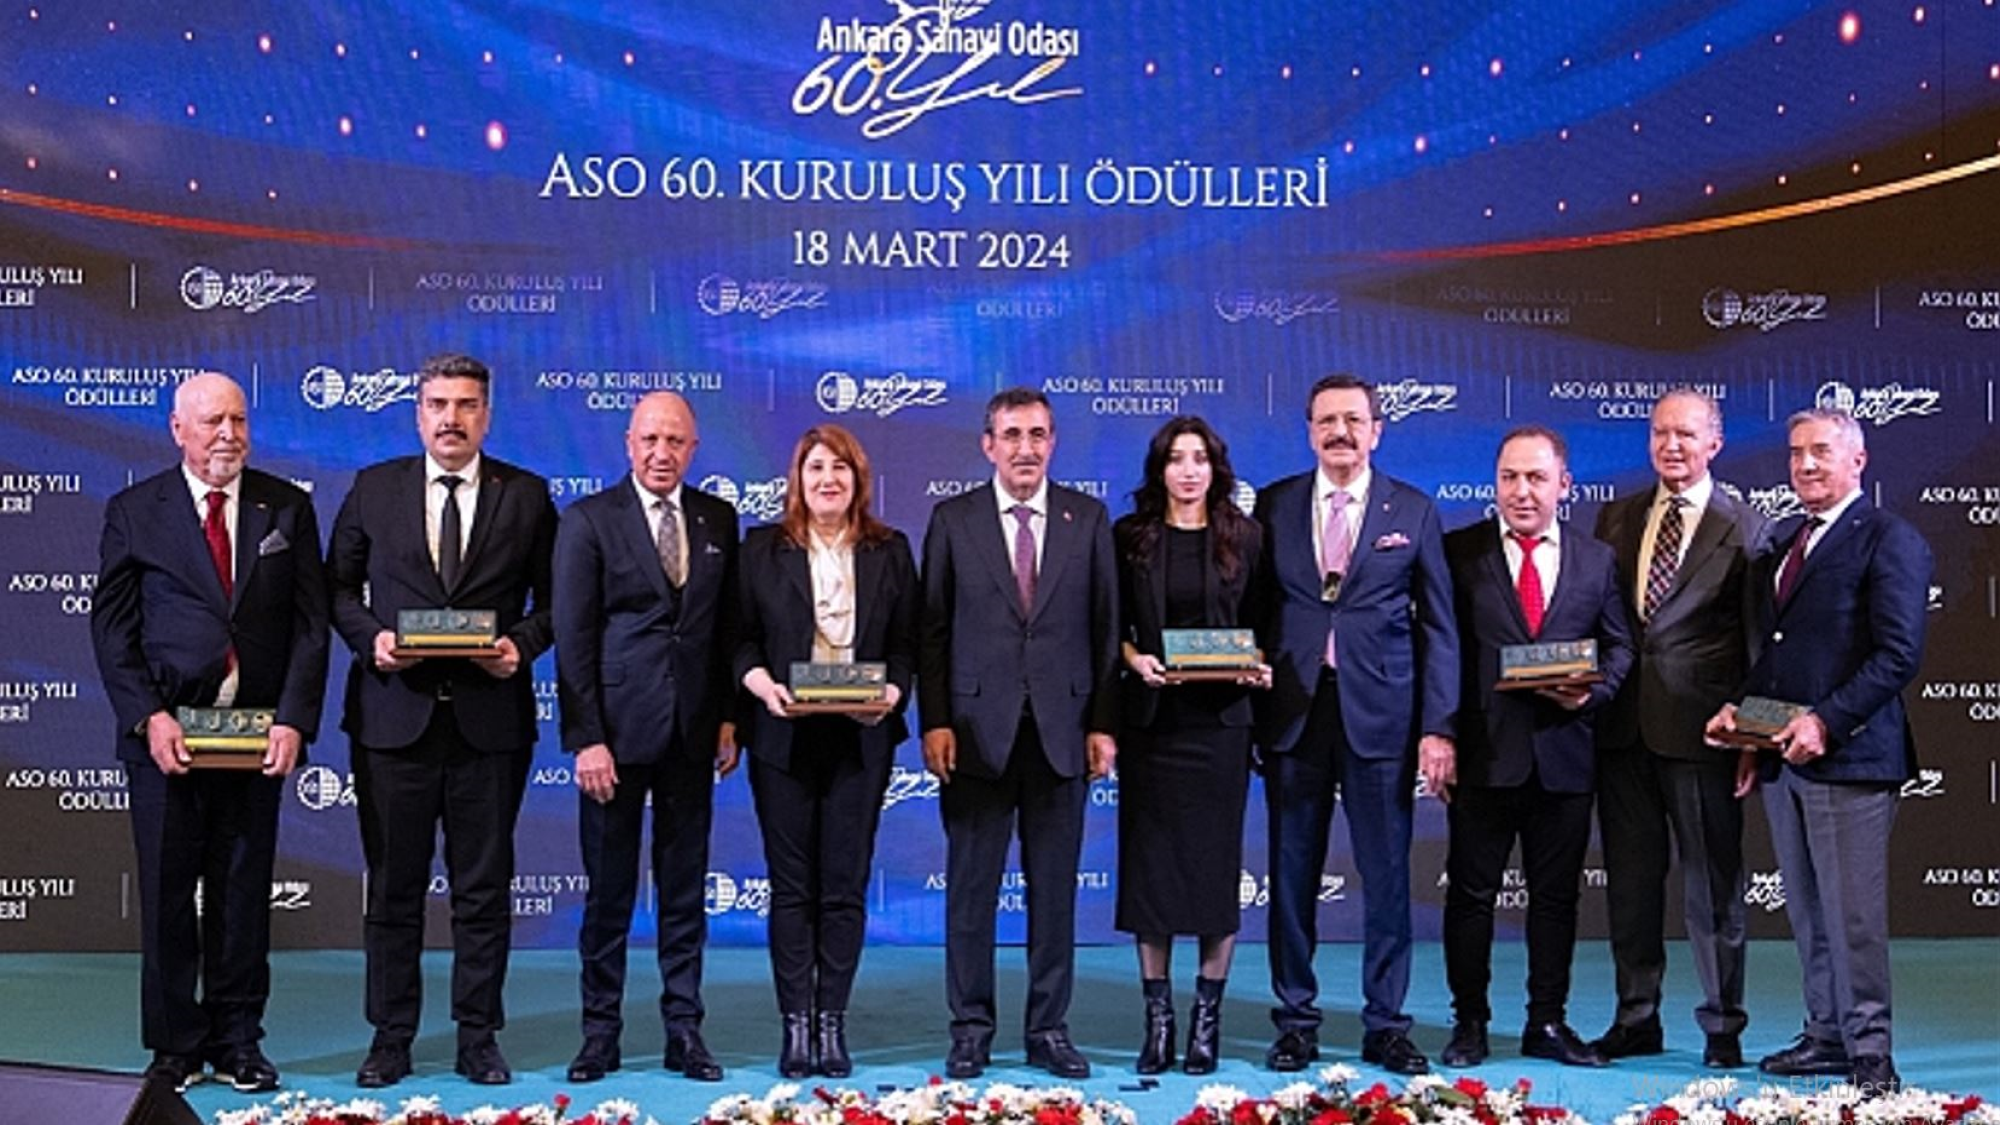 Ankara Chamber of Industry celebrates its 60th anniversary